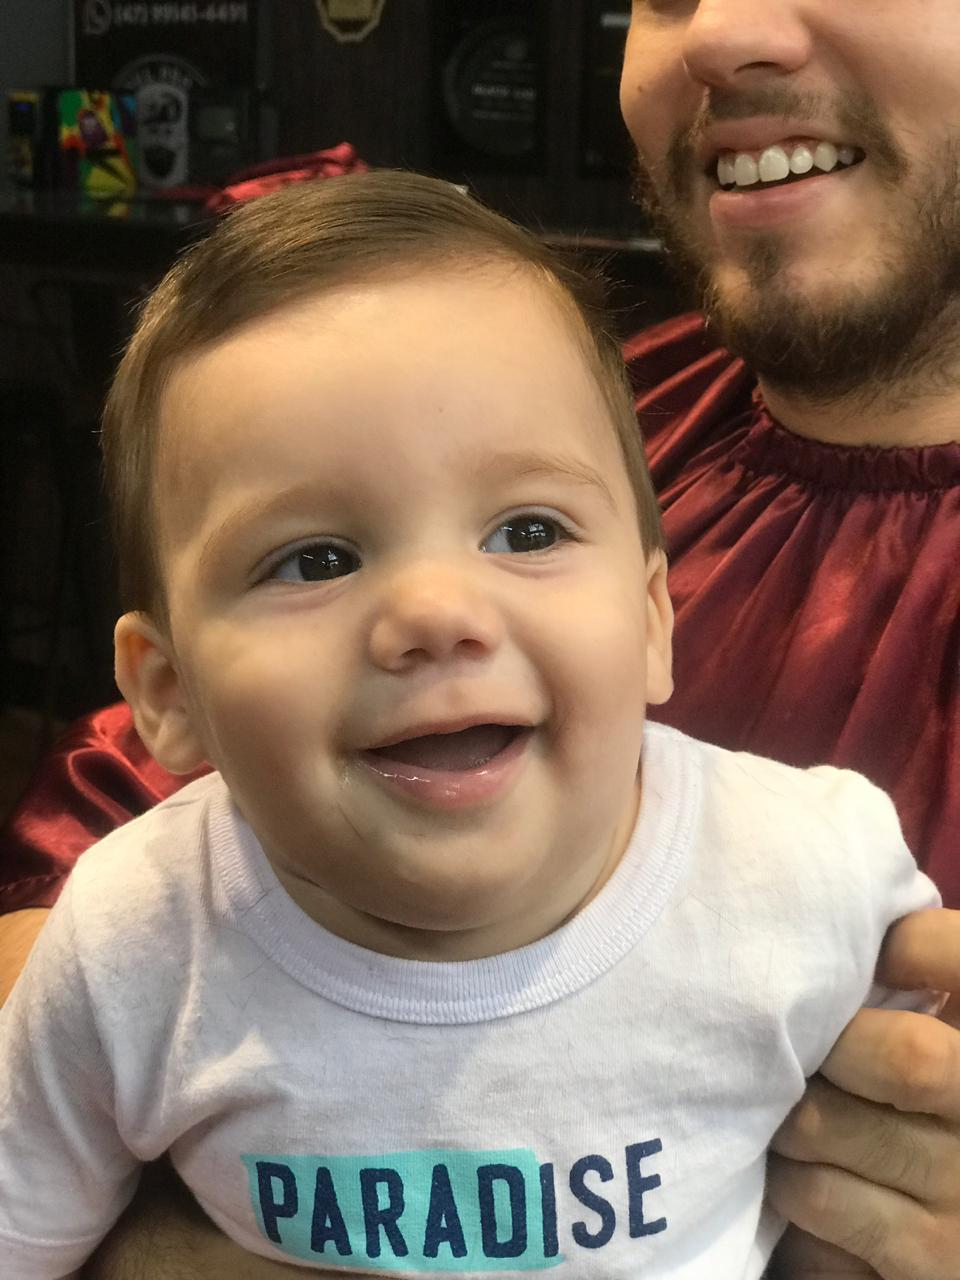 corte de cabelo bebe masculino 1 ano